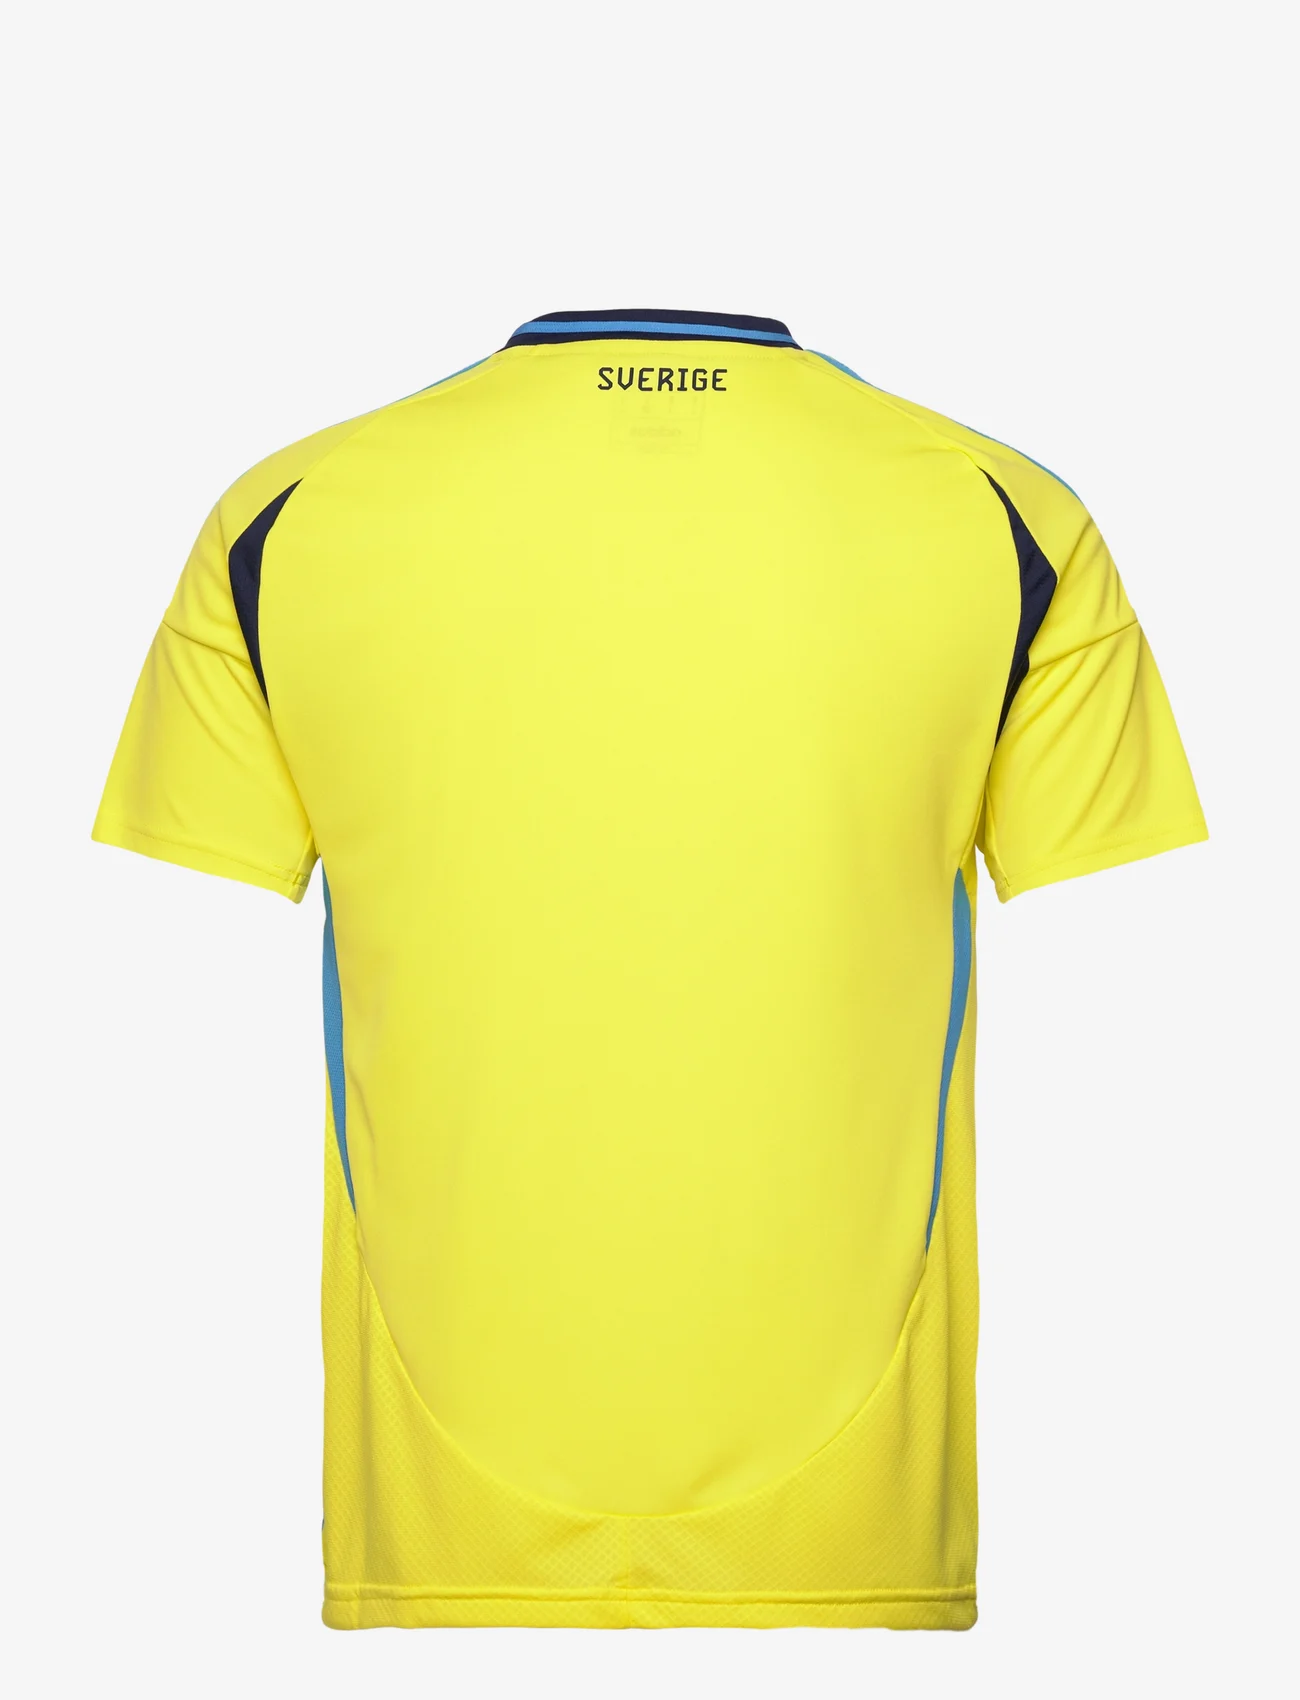 adidas Performance - SVFF H JSY - futbolo marškinėliai - byello - 1